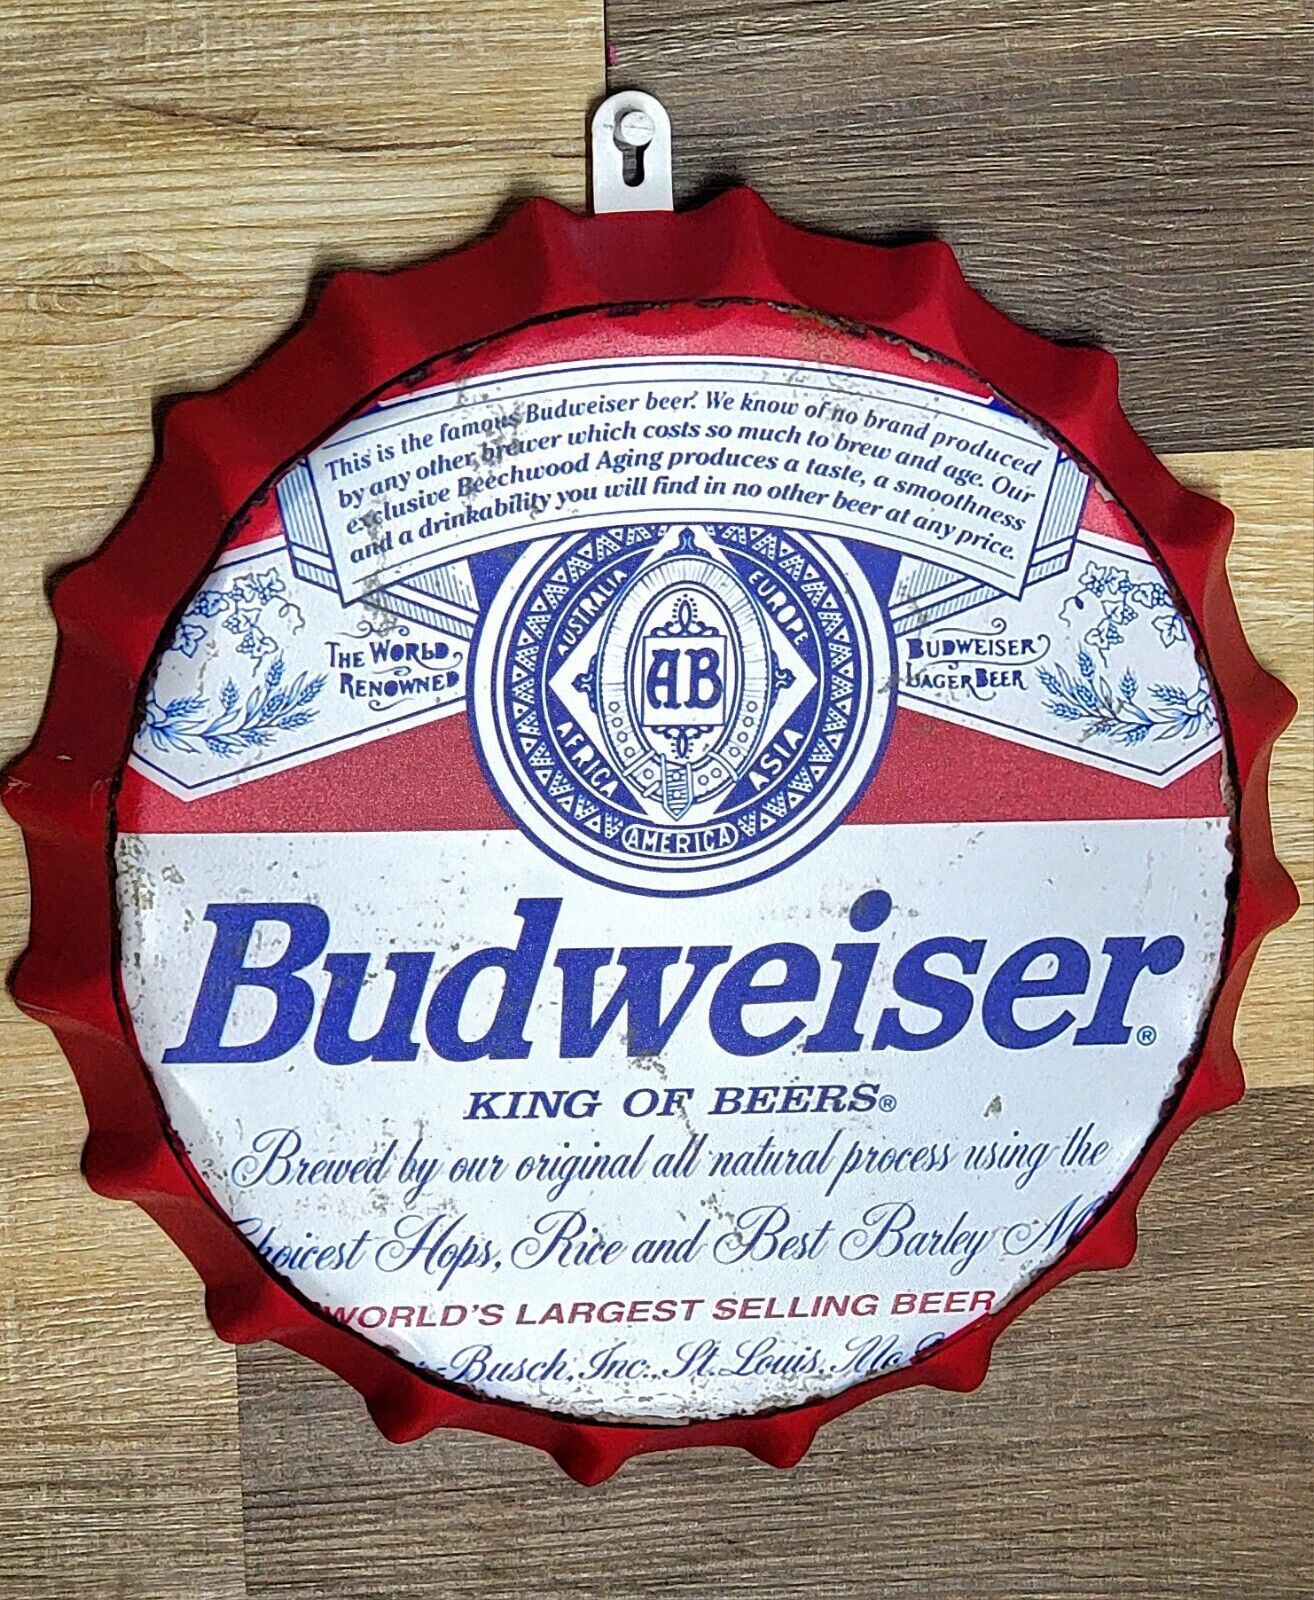 Budweiser King of Beers Bottle Cap Tin Sign Man cave Bar Decor Metal Signs